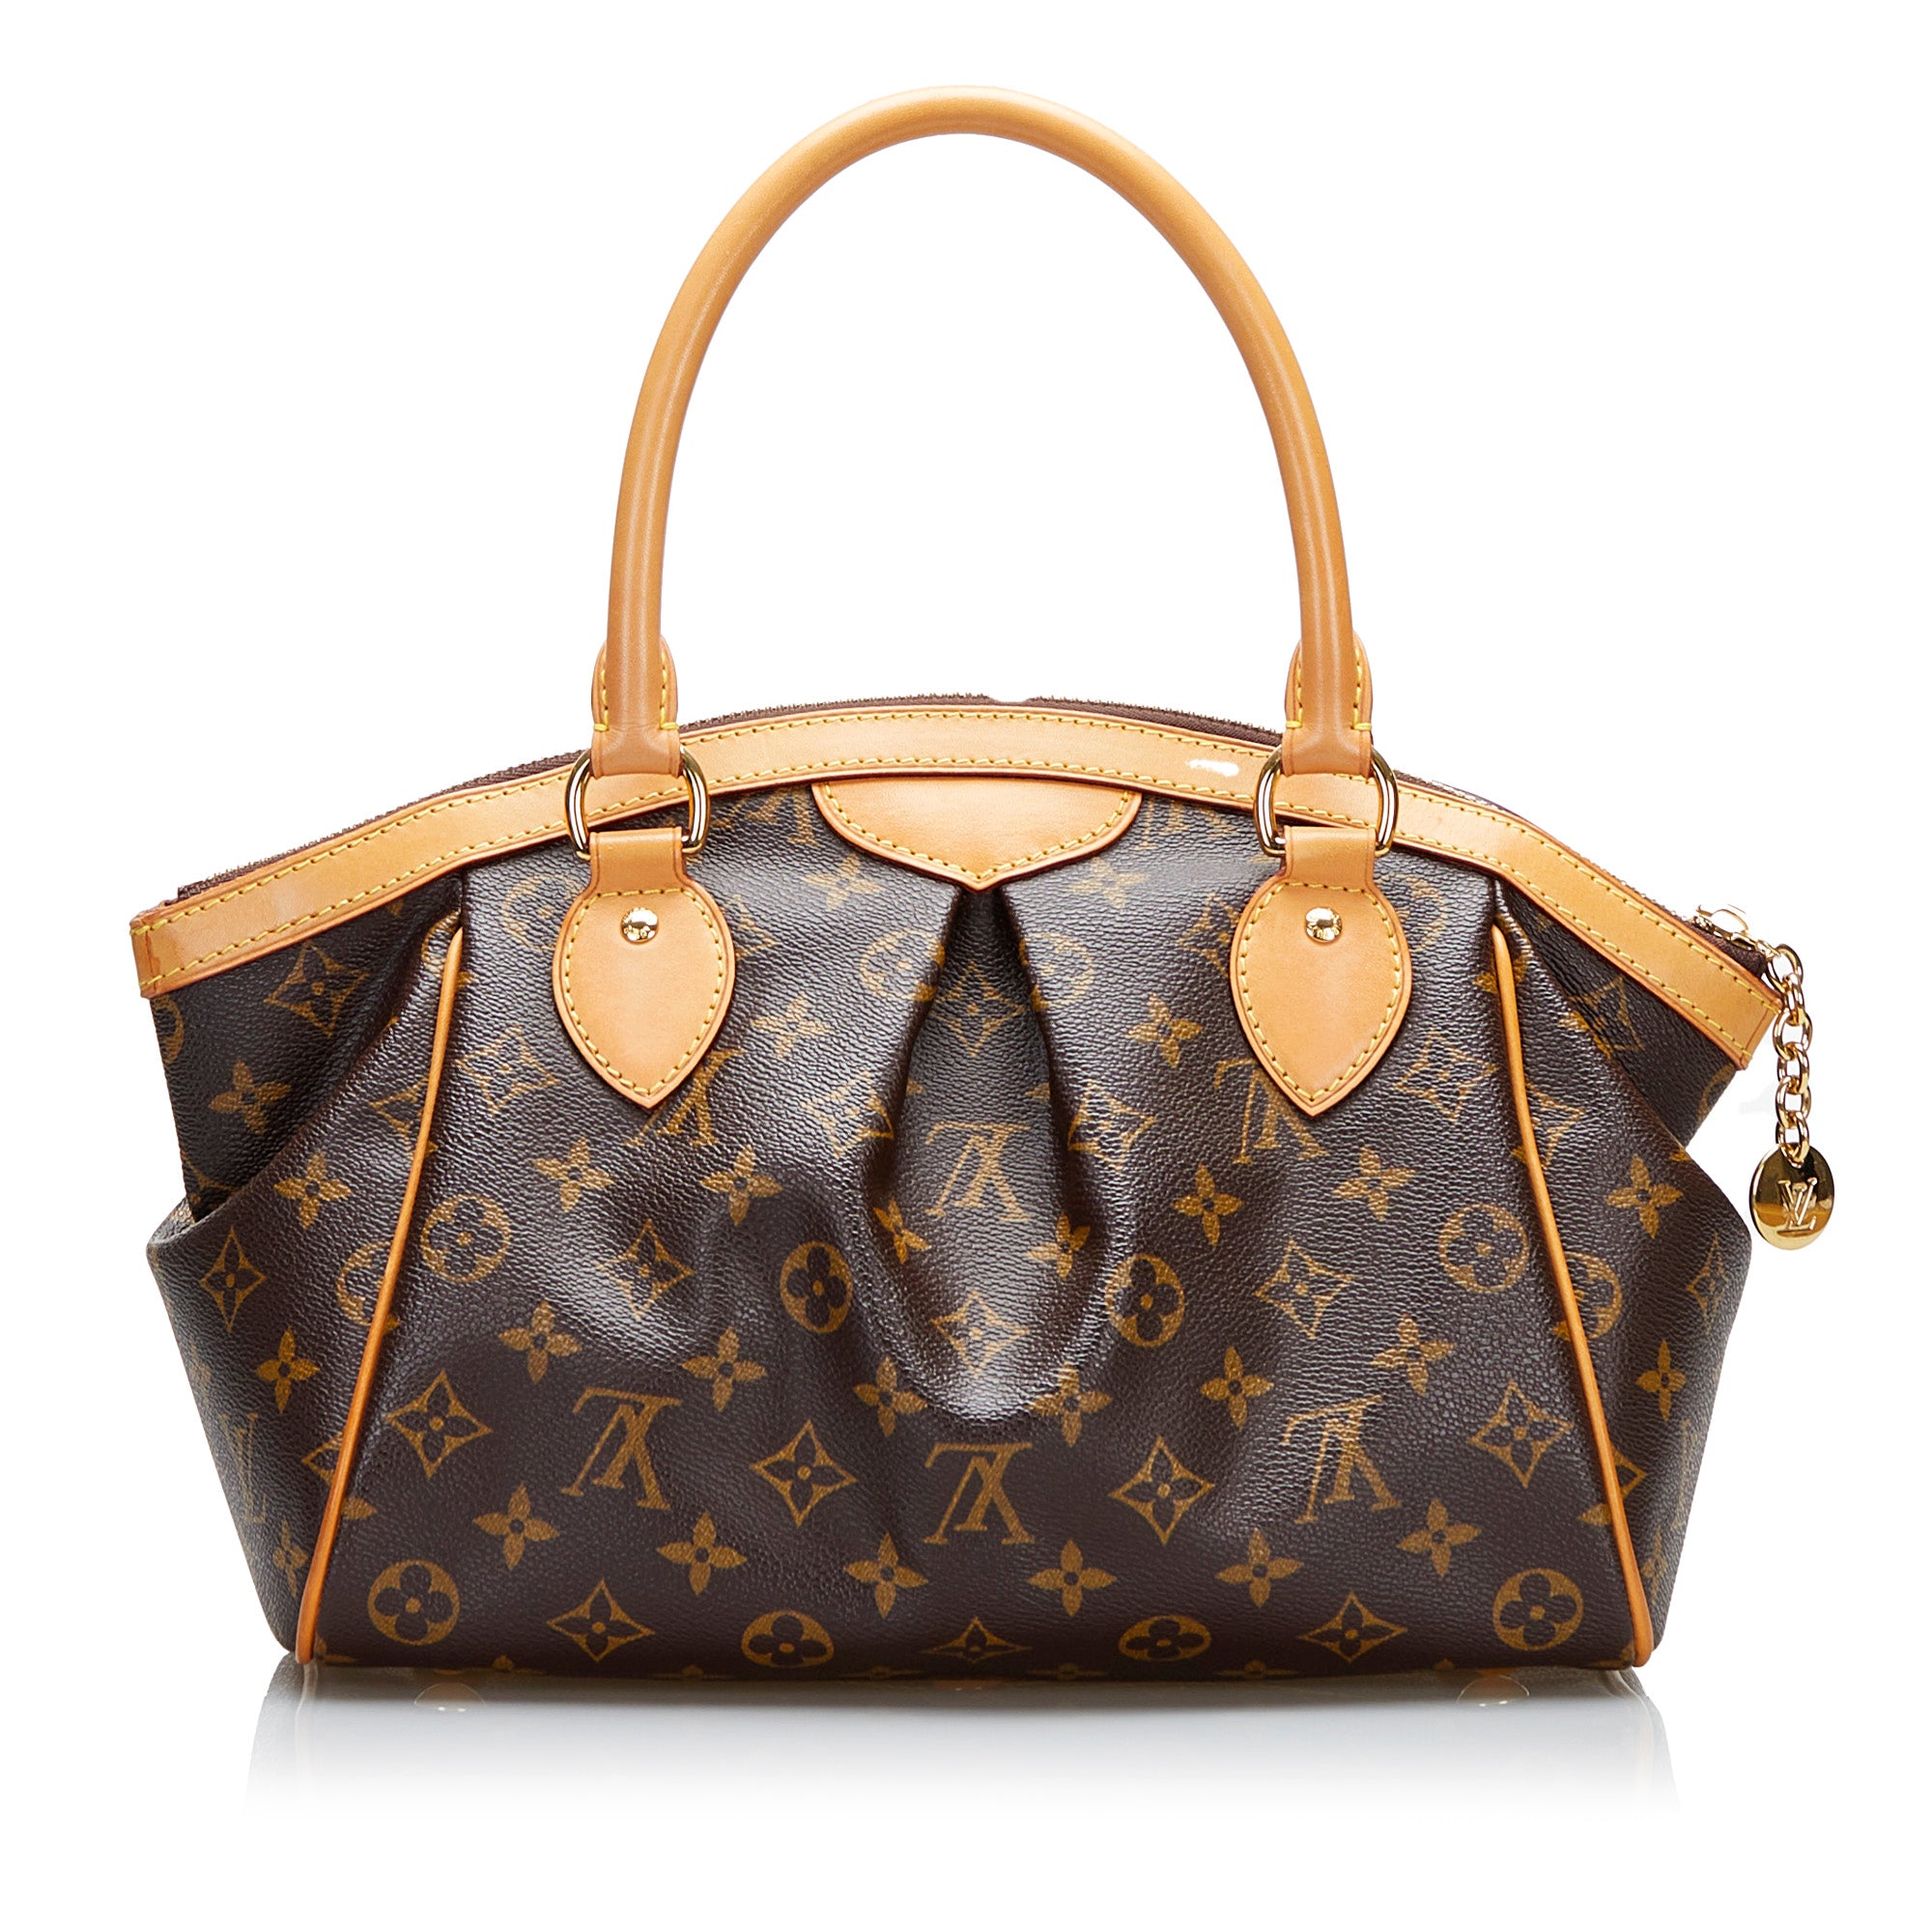 Tivoli - Hand - Bag - Louis - PM - Vuitton - Monogram - Louis